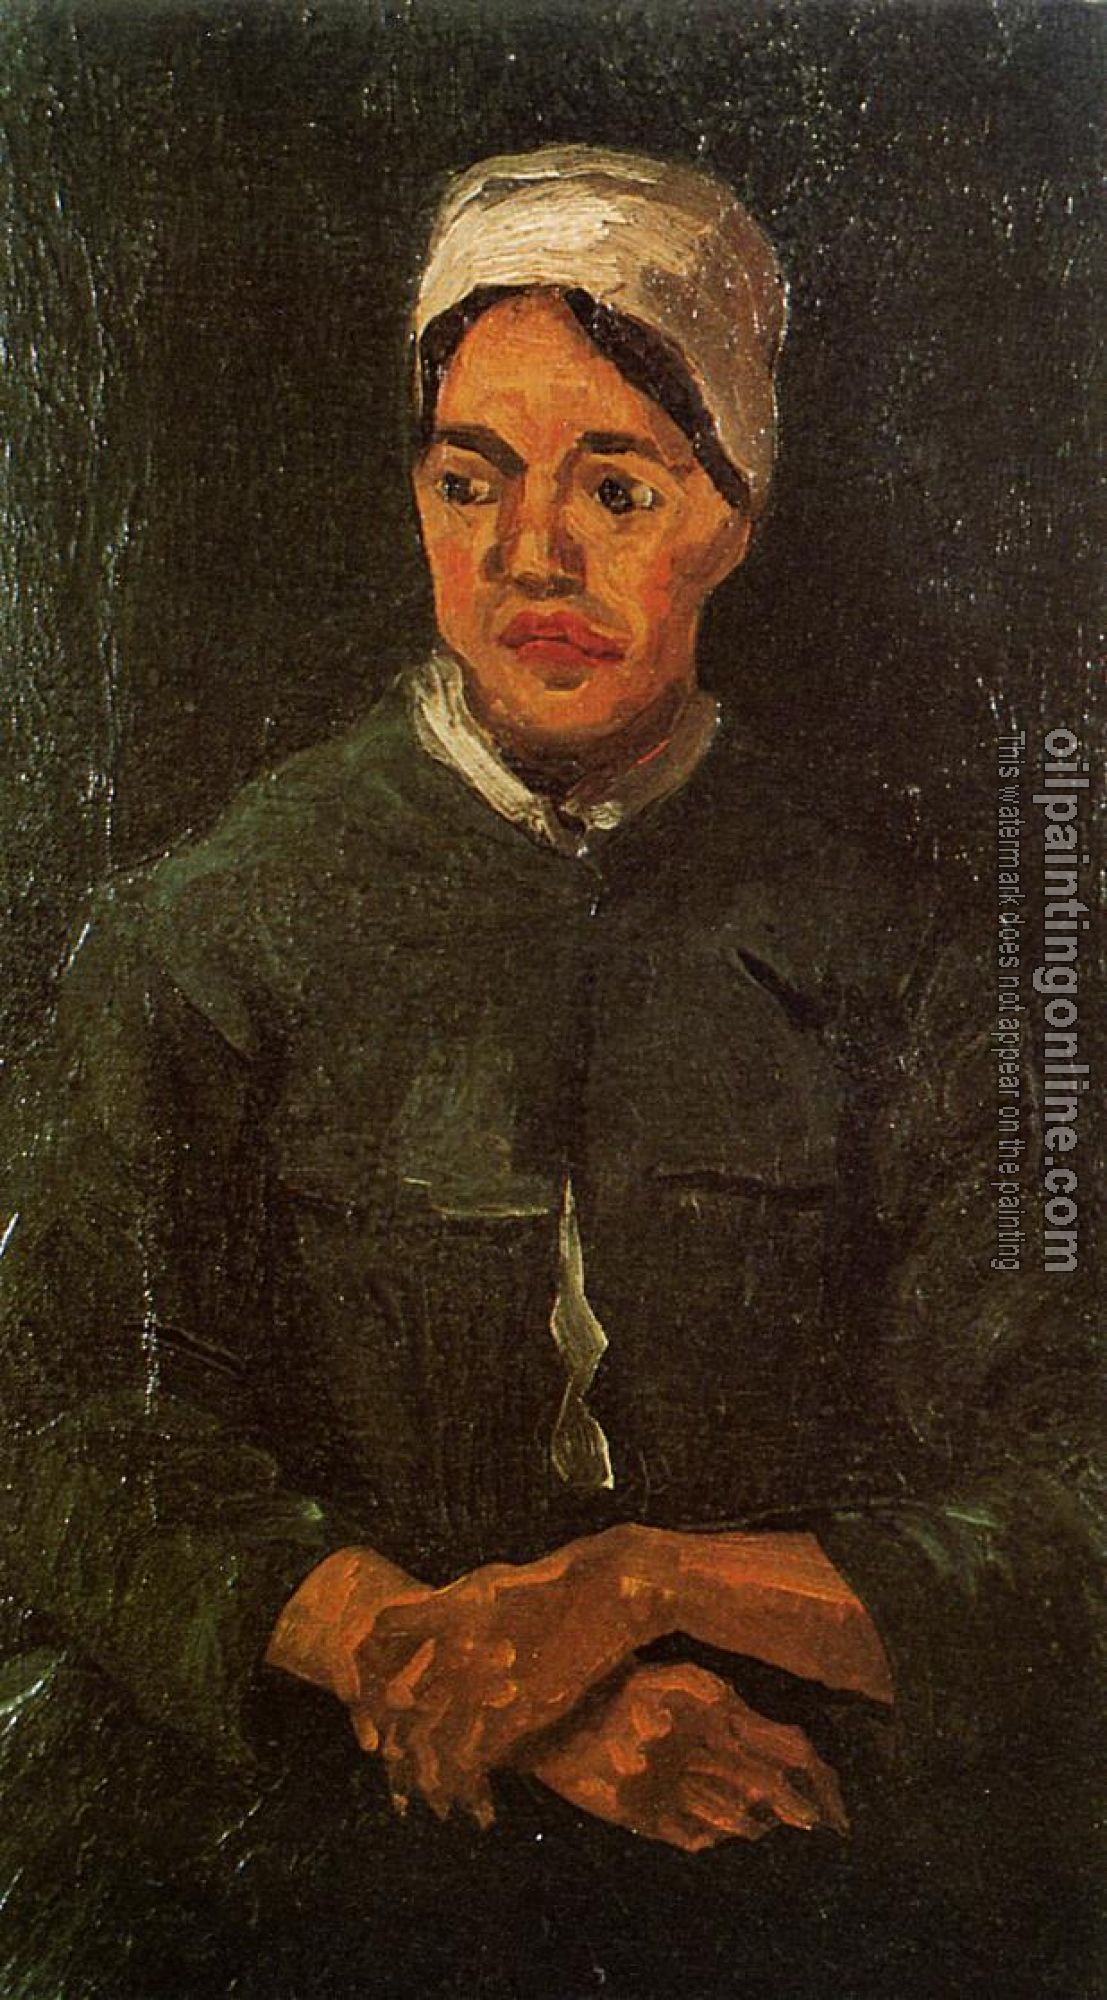 Gogh, Vincent van - Peasant Woman, Seated